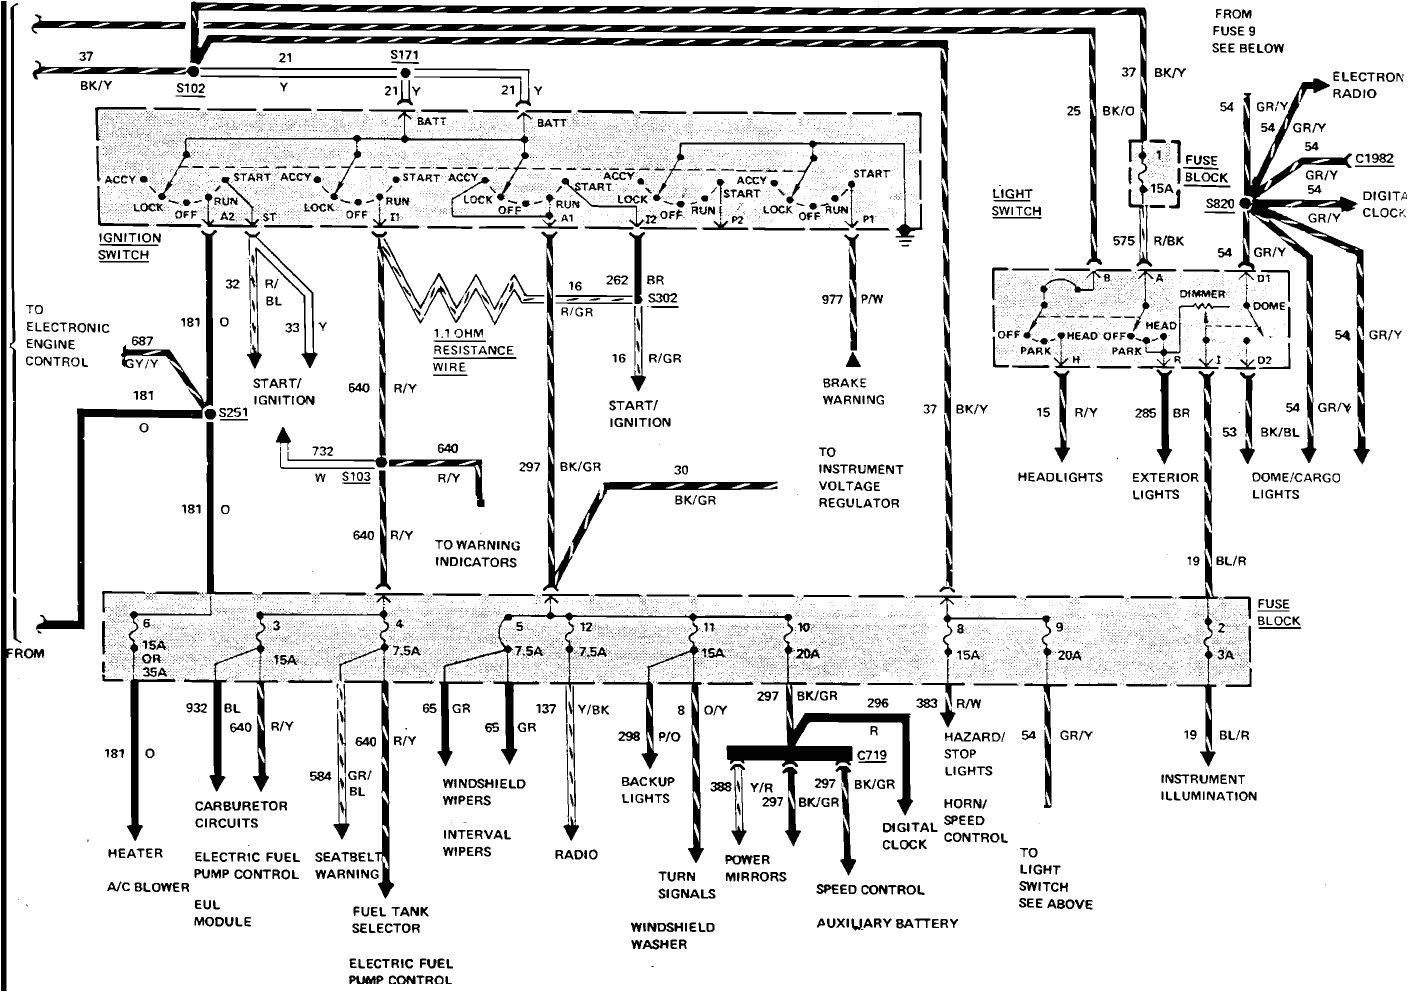 fleetwood motorhomes wiring diagrams wiring diagram show fleetwood rv electrical schematic wiring diagram files fleetwood motorhome